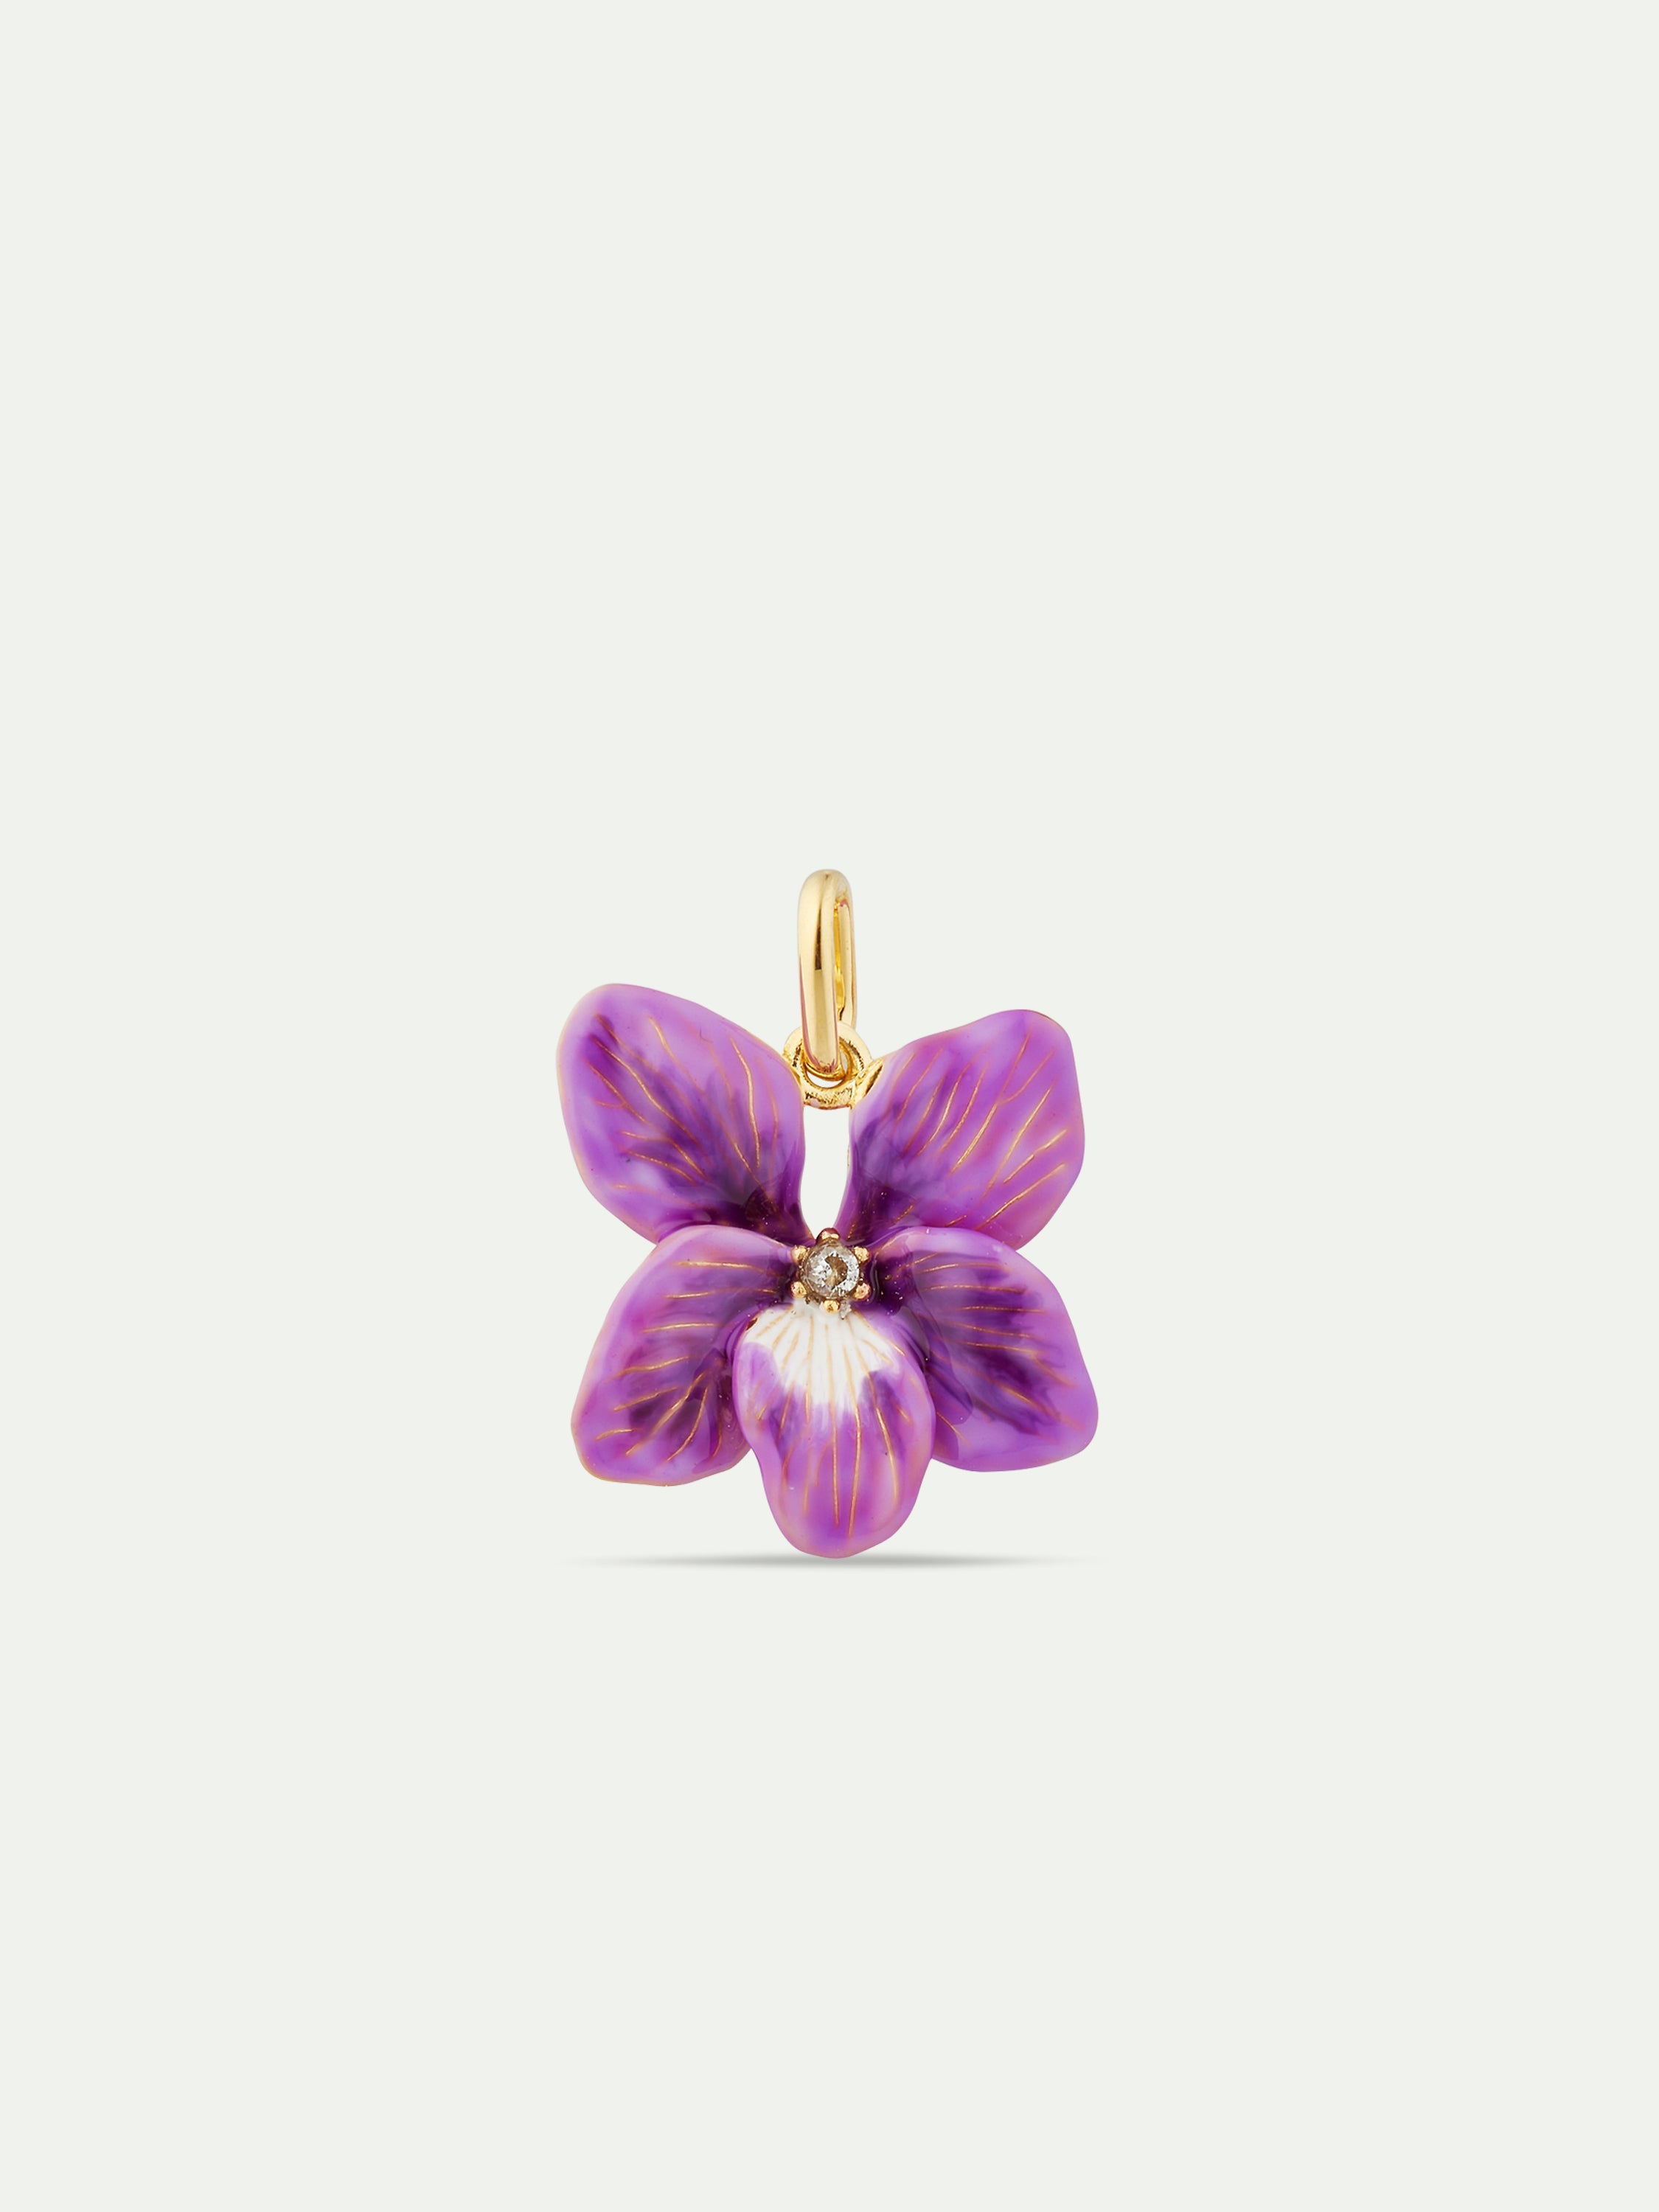 Violet flower pendant